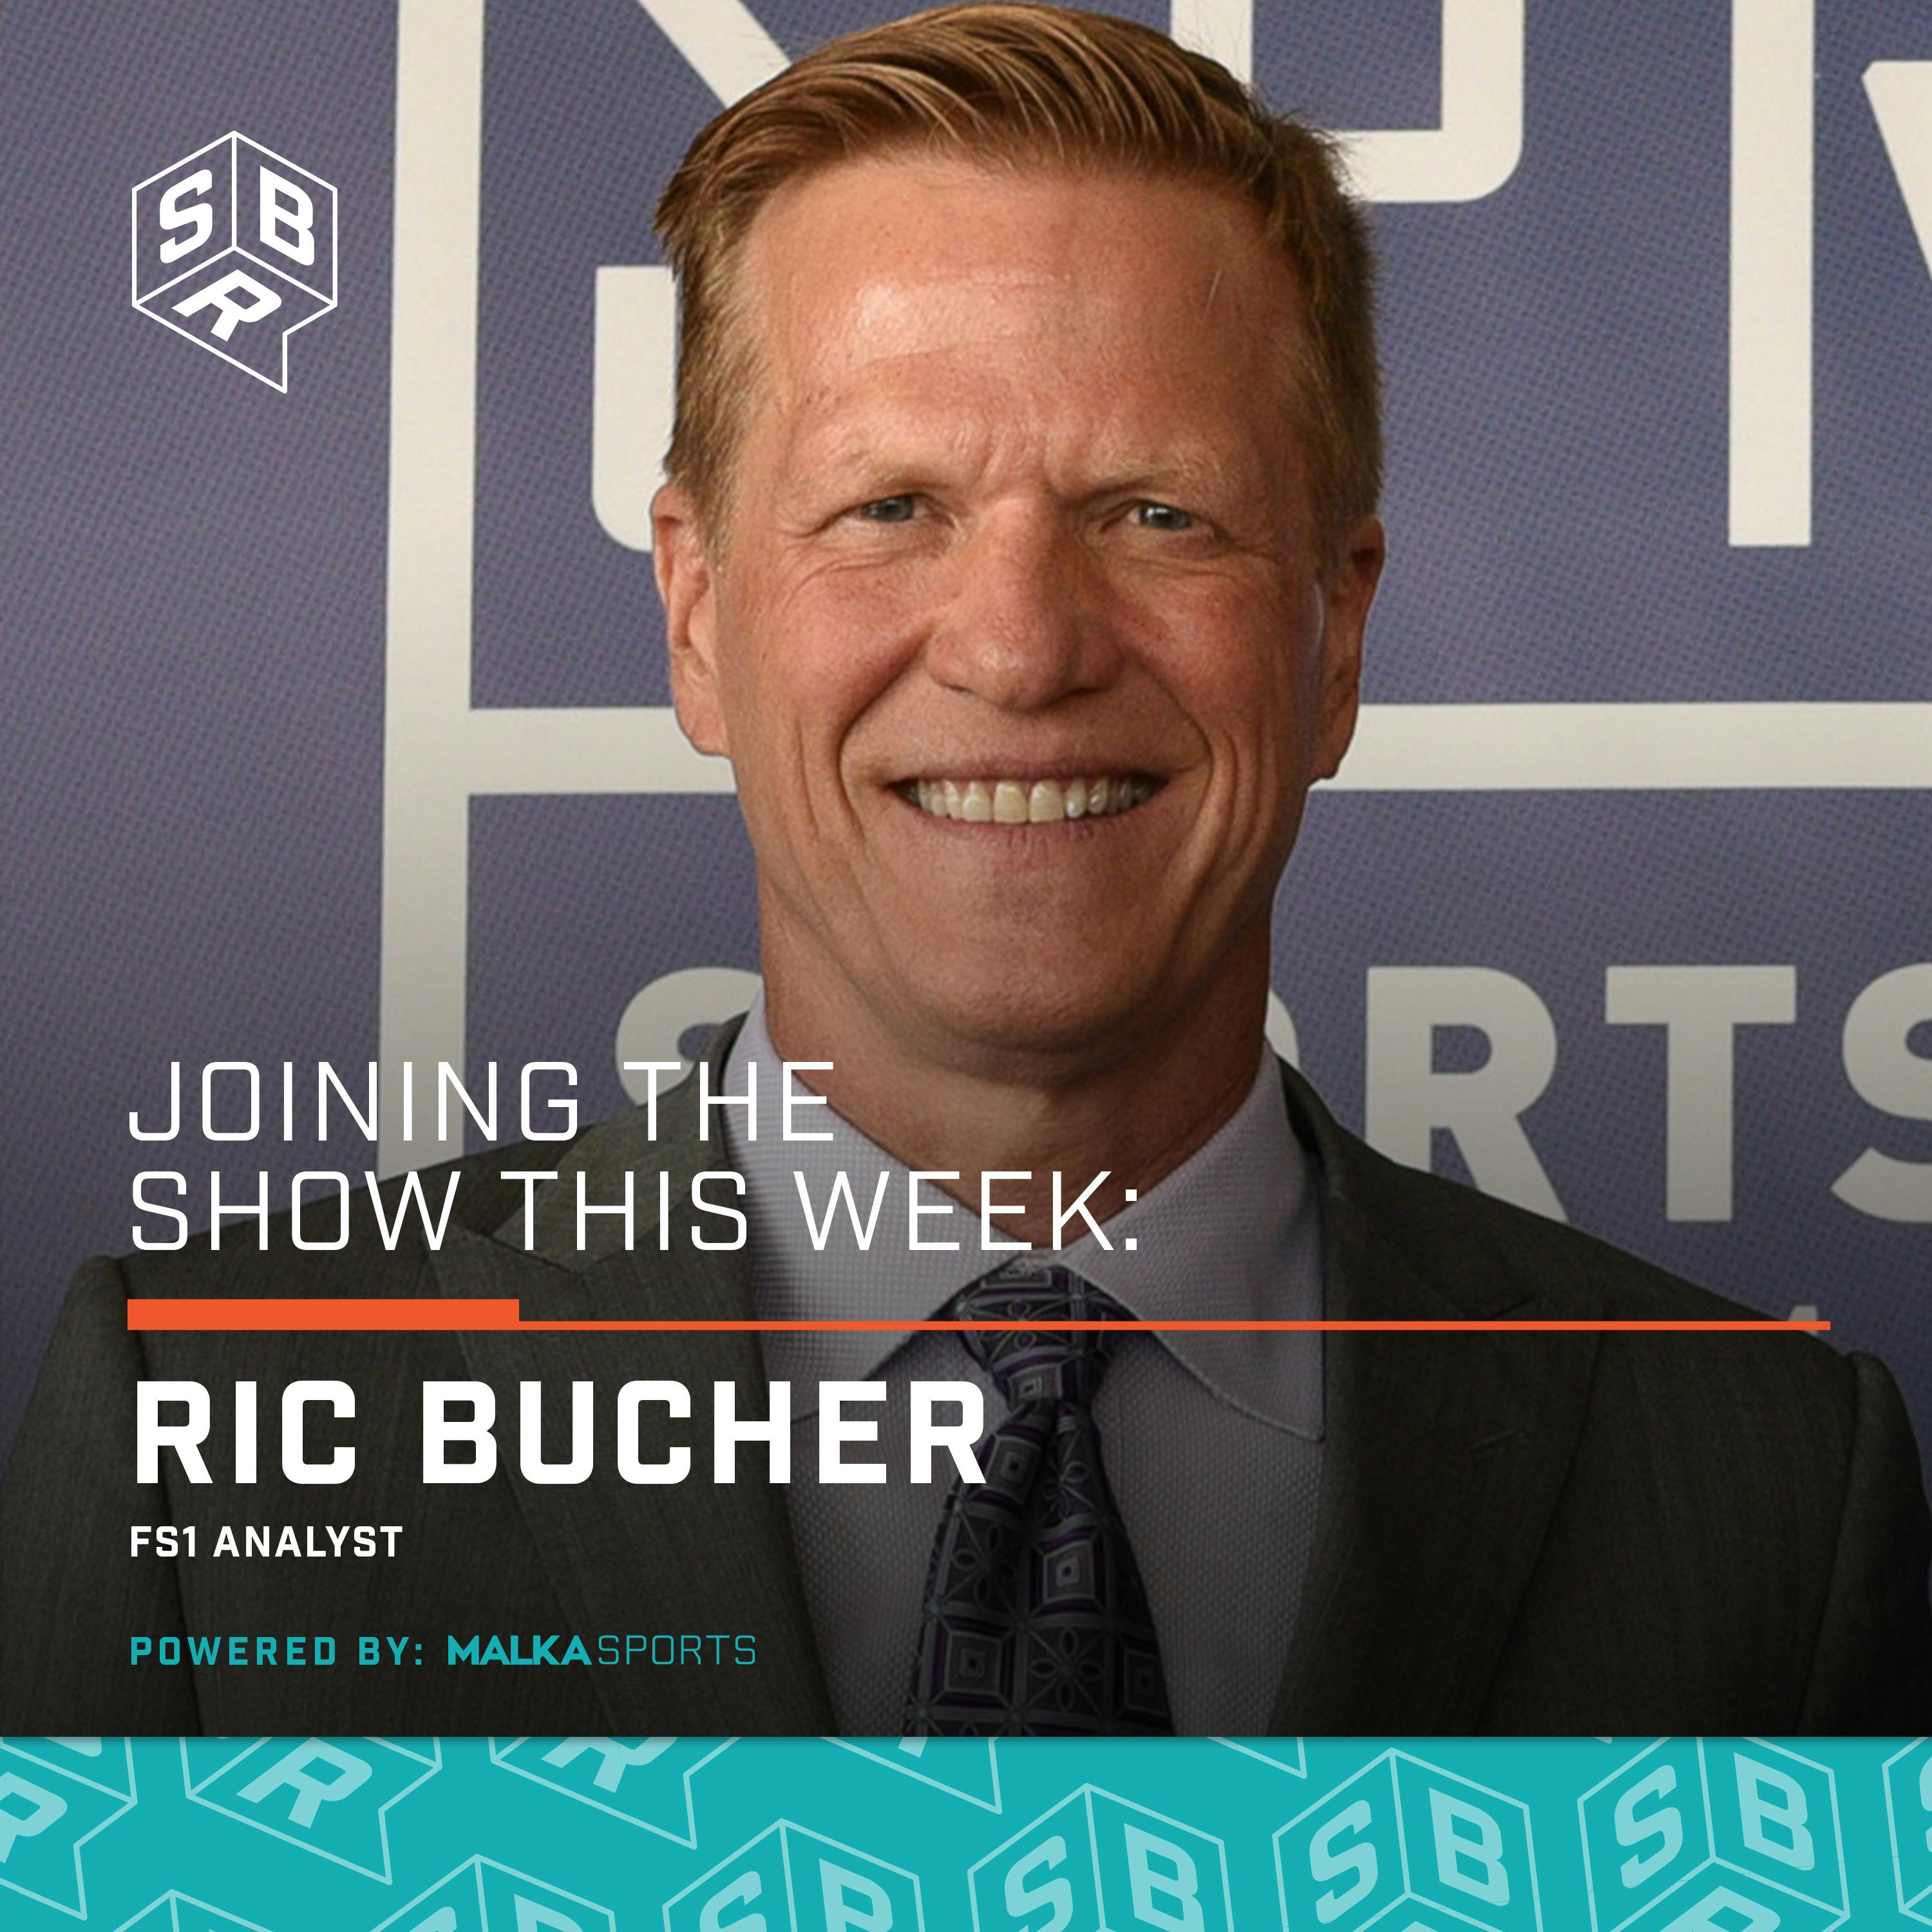 Ric Bucher (@RicBucher) - Fox Sports Analyst, Longtime NBA reporter